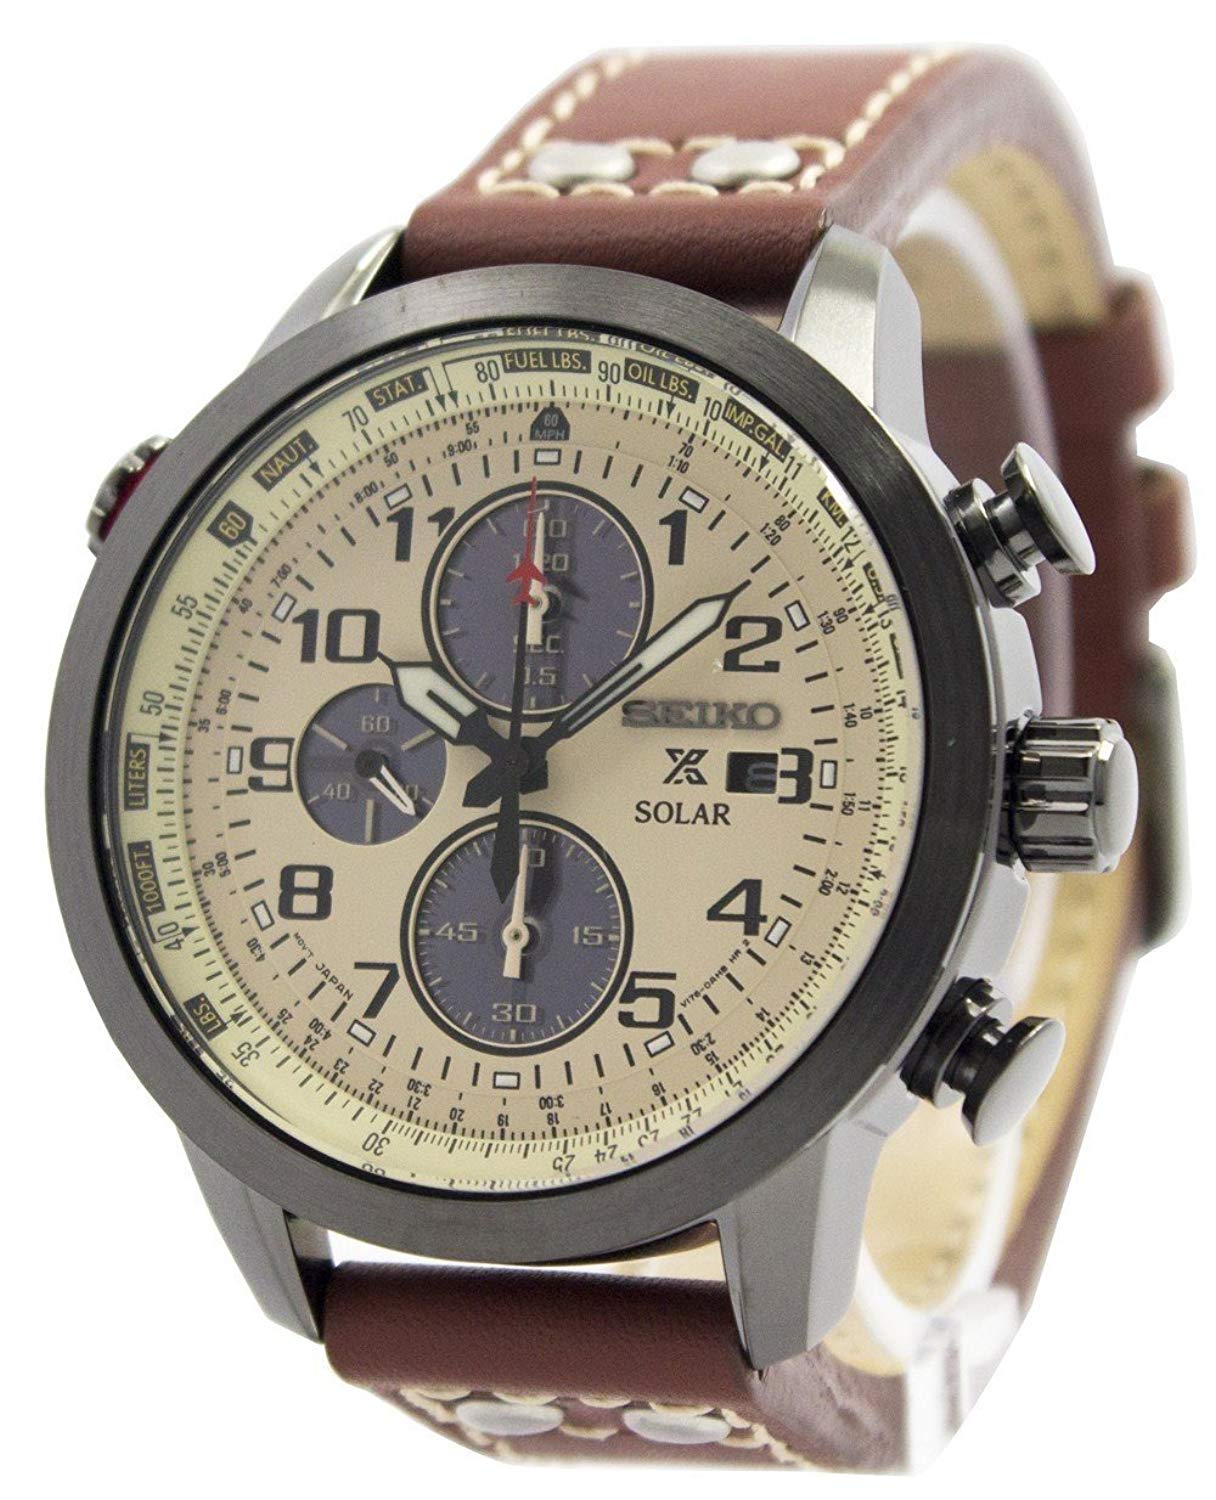 SEIKO PROSPEX(セイコー プロスペックス)の腕時計はオシャレで安くコスパ抜群！ | 男の悩みと迷いに解決策を！